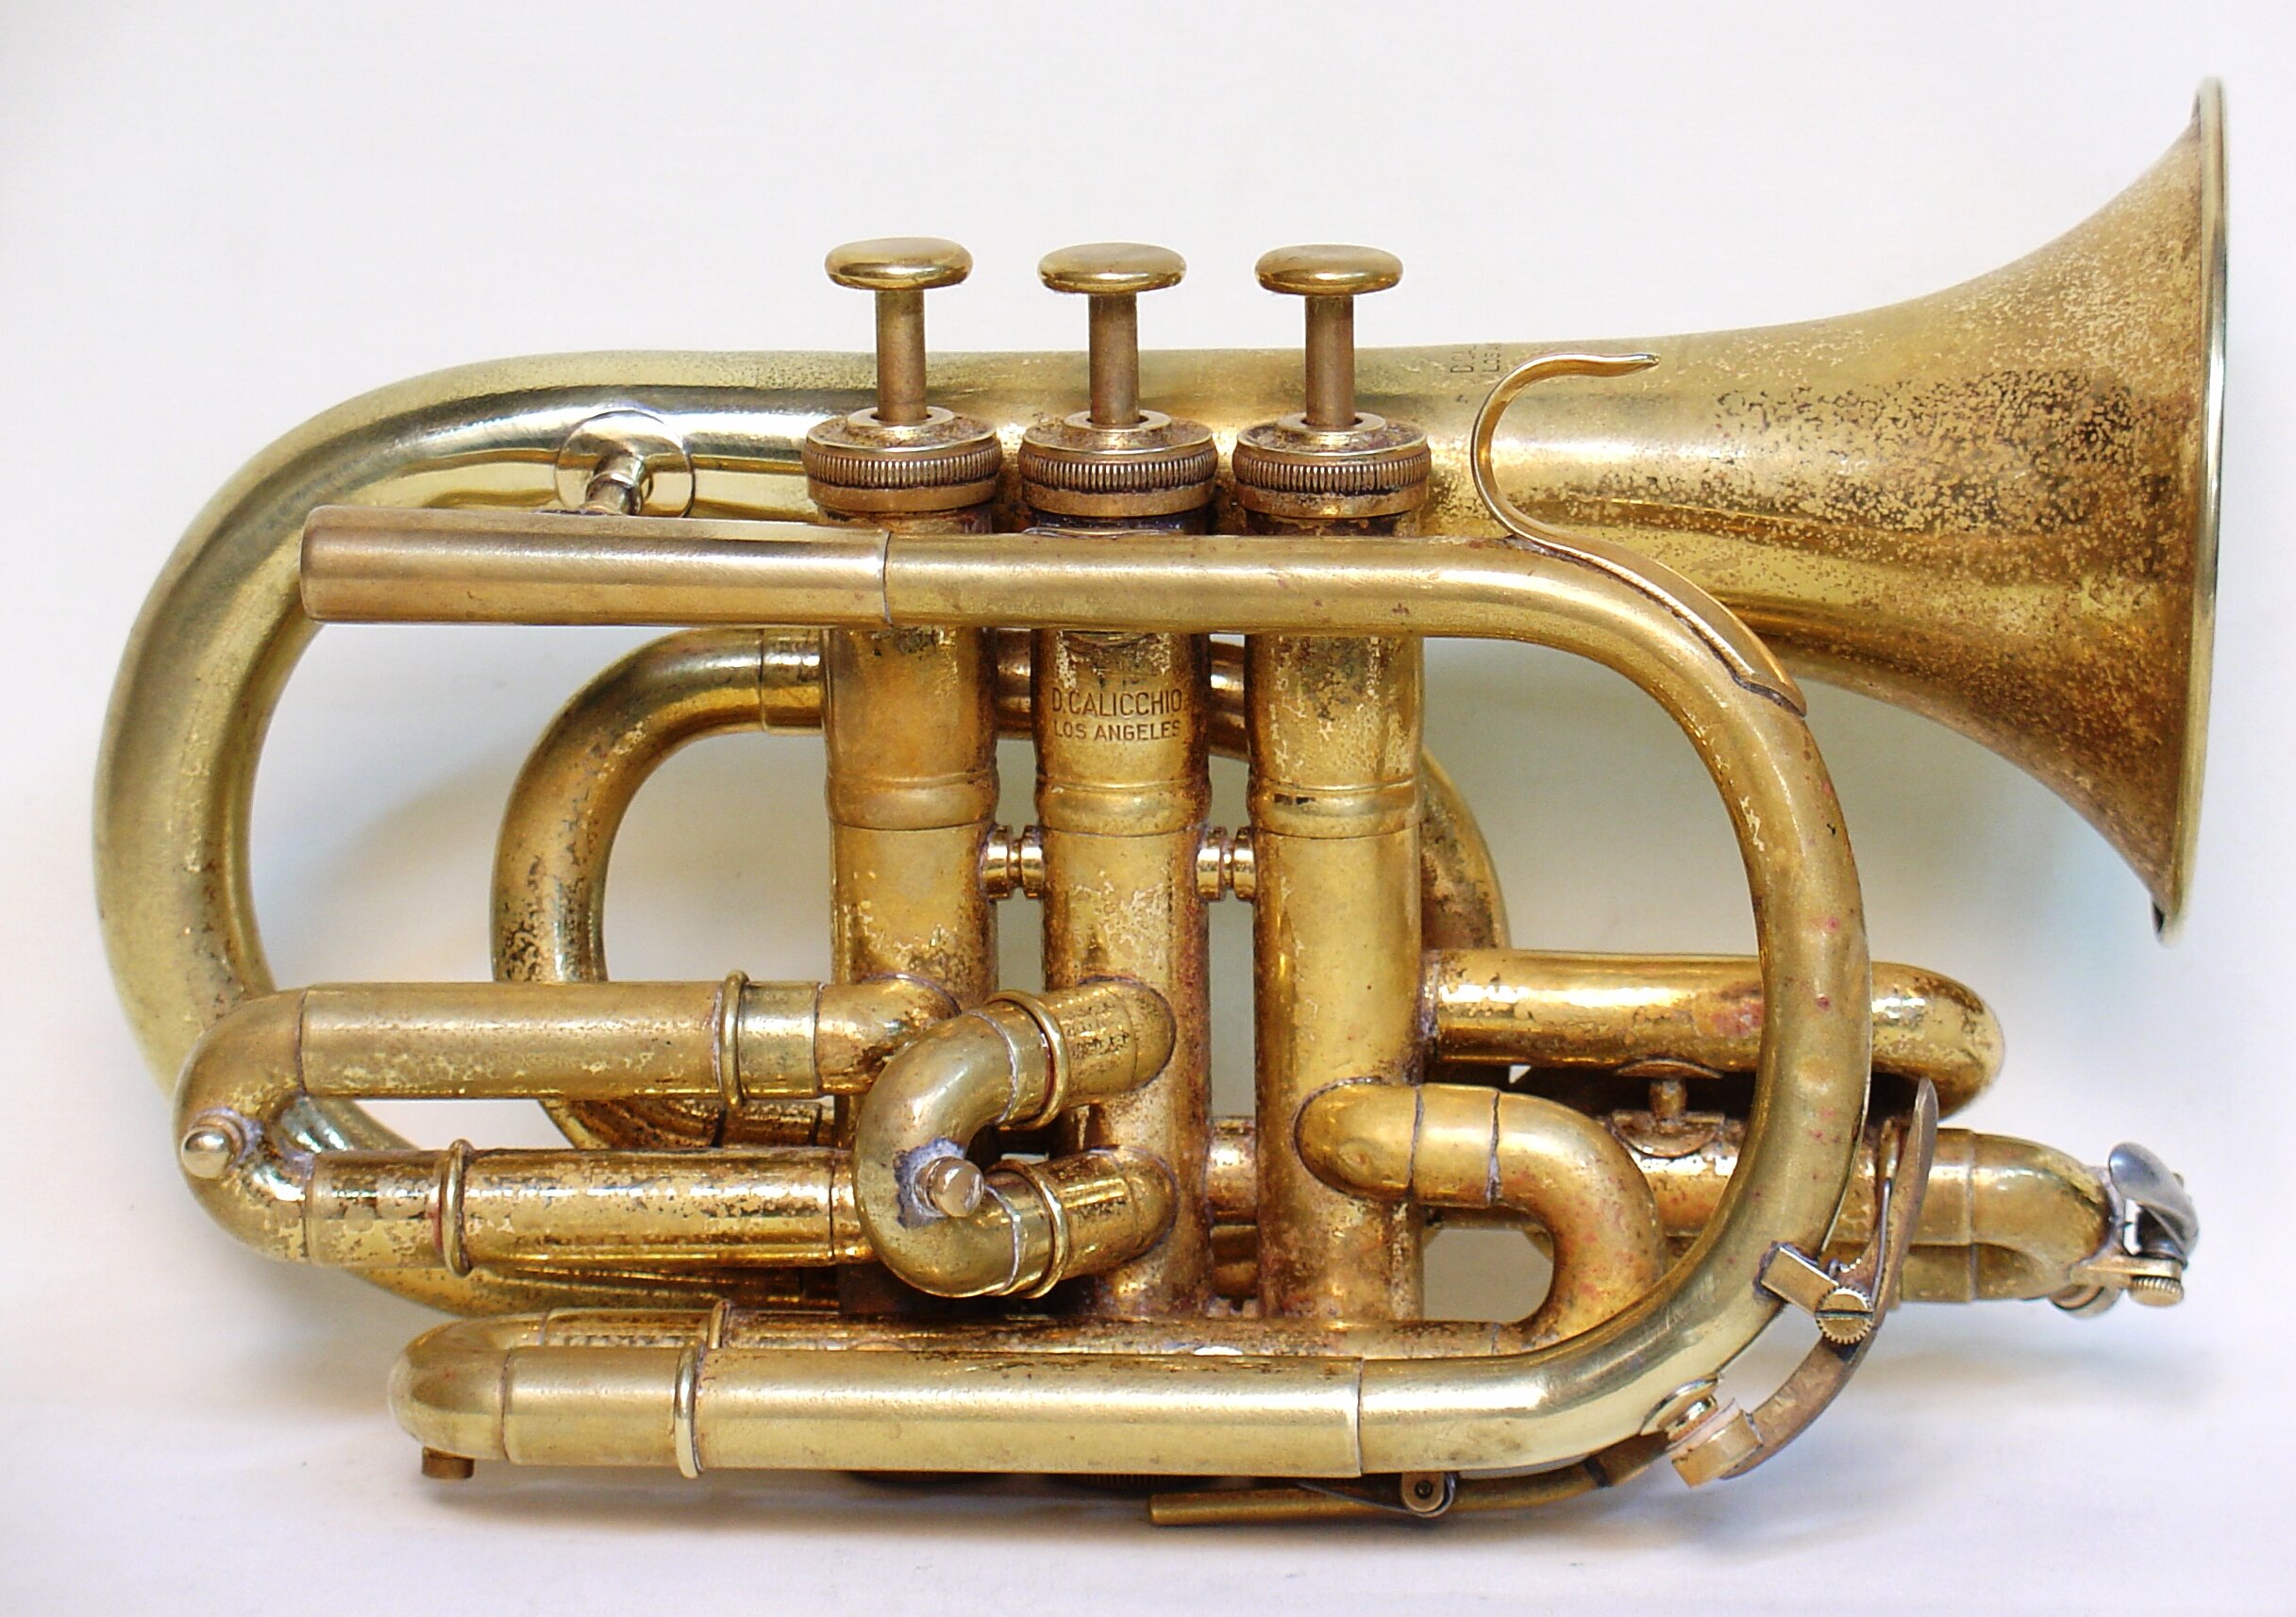 Uan Rasey's Calicchio Pocket Trumpet